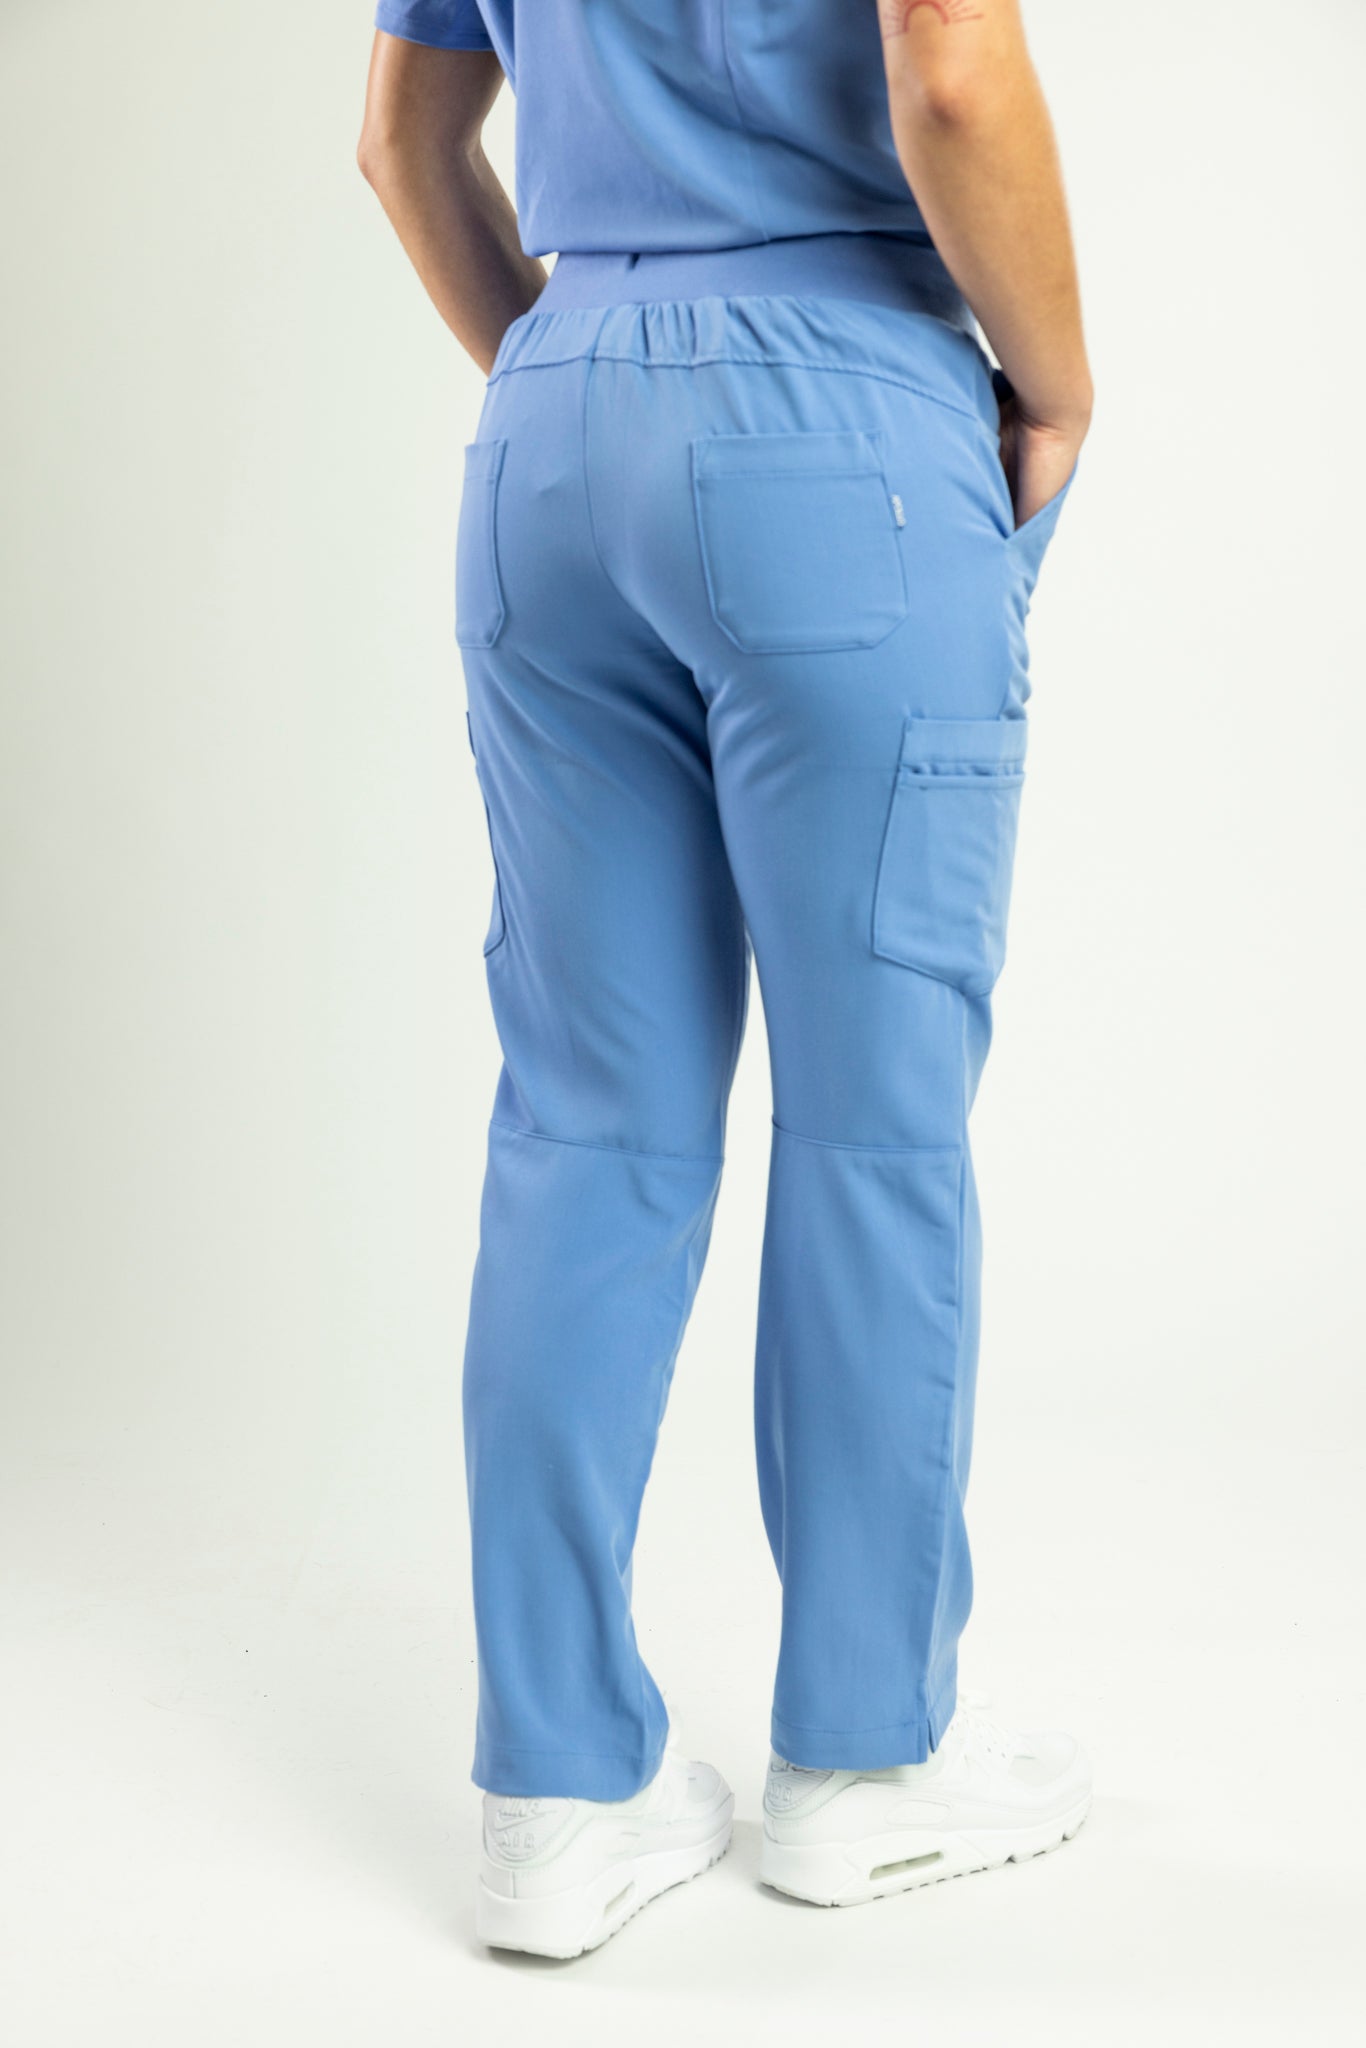 Apollo Scrubs - Hers - Utility Pant for women, antimicrobial, straight leg loose style bottom